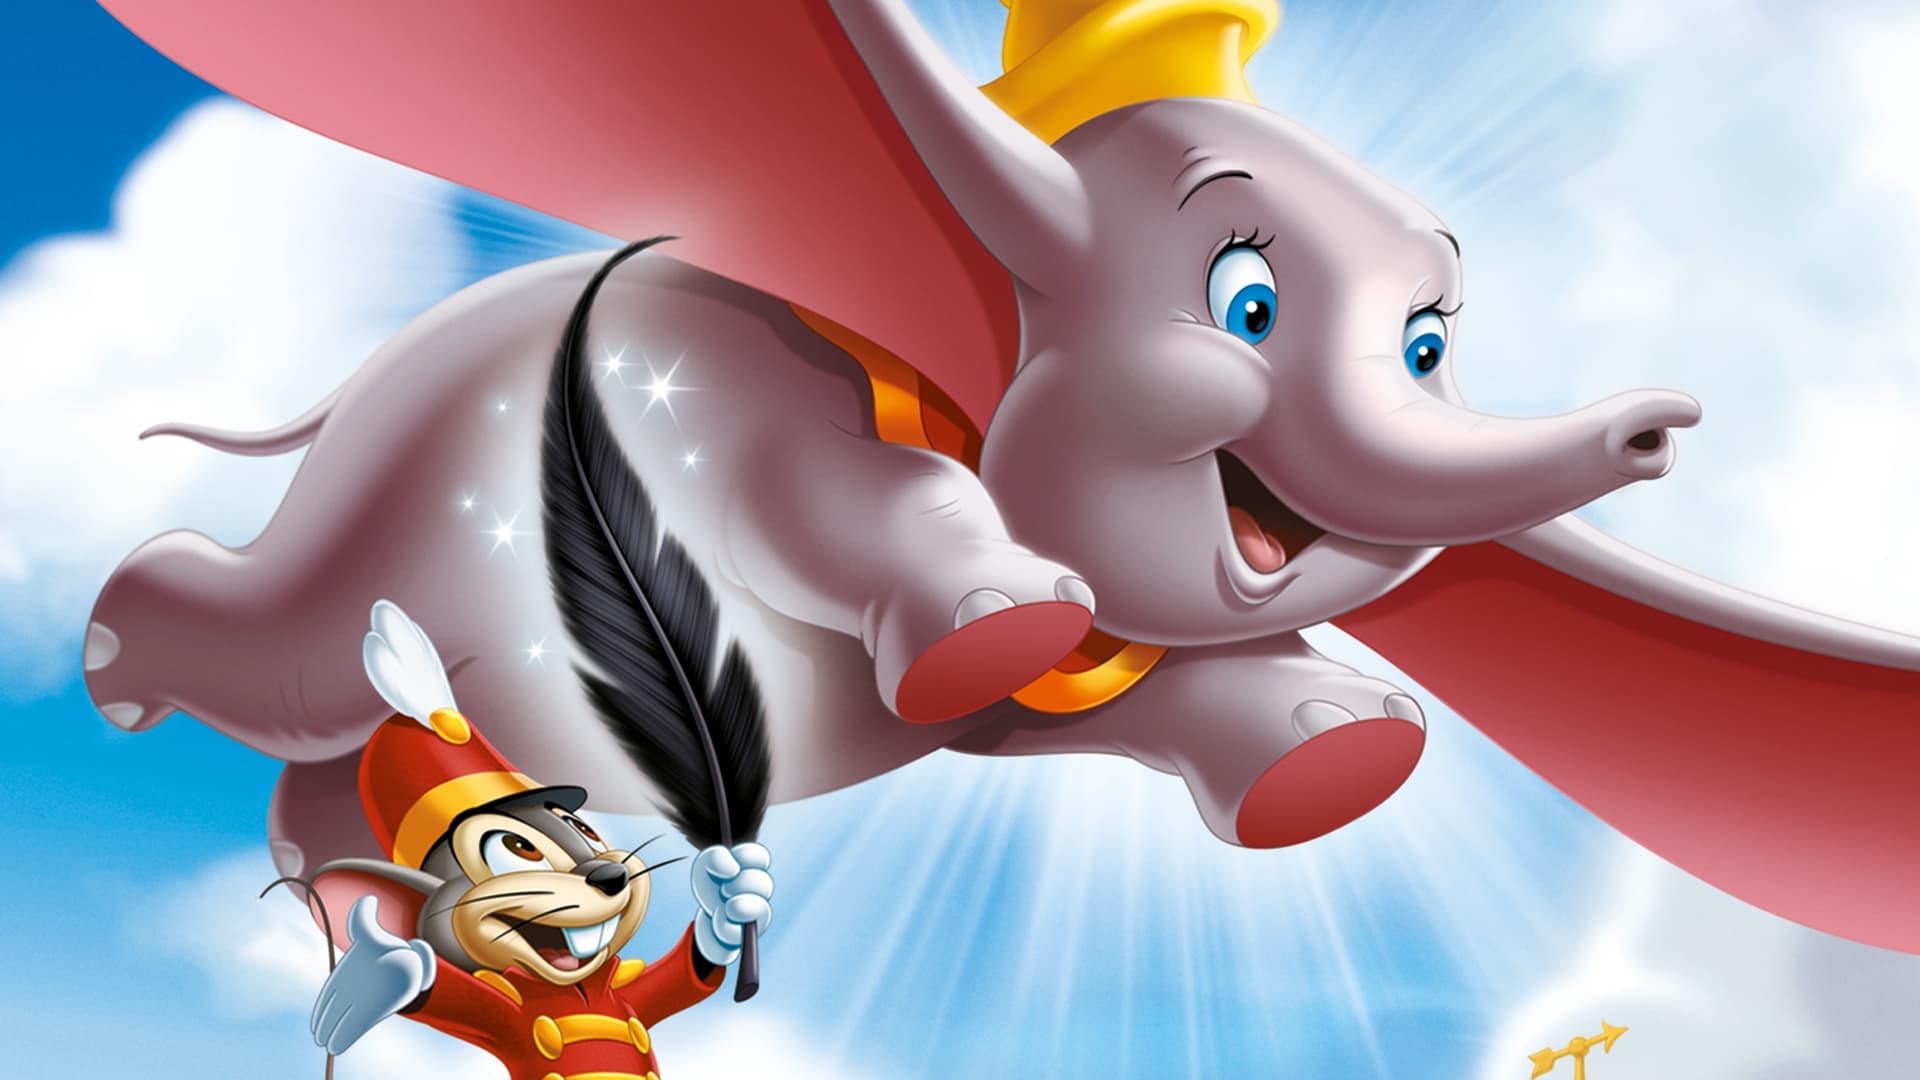 Image du film Dumbo, l'éléphant volant cpy7pentvpcy0tuc5pxrgjys8qxjpg